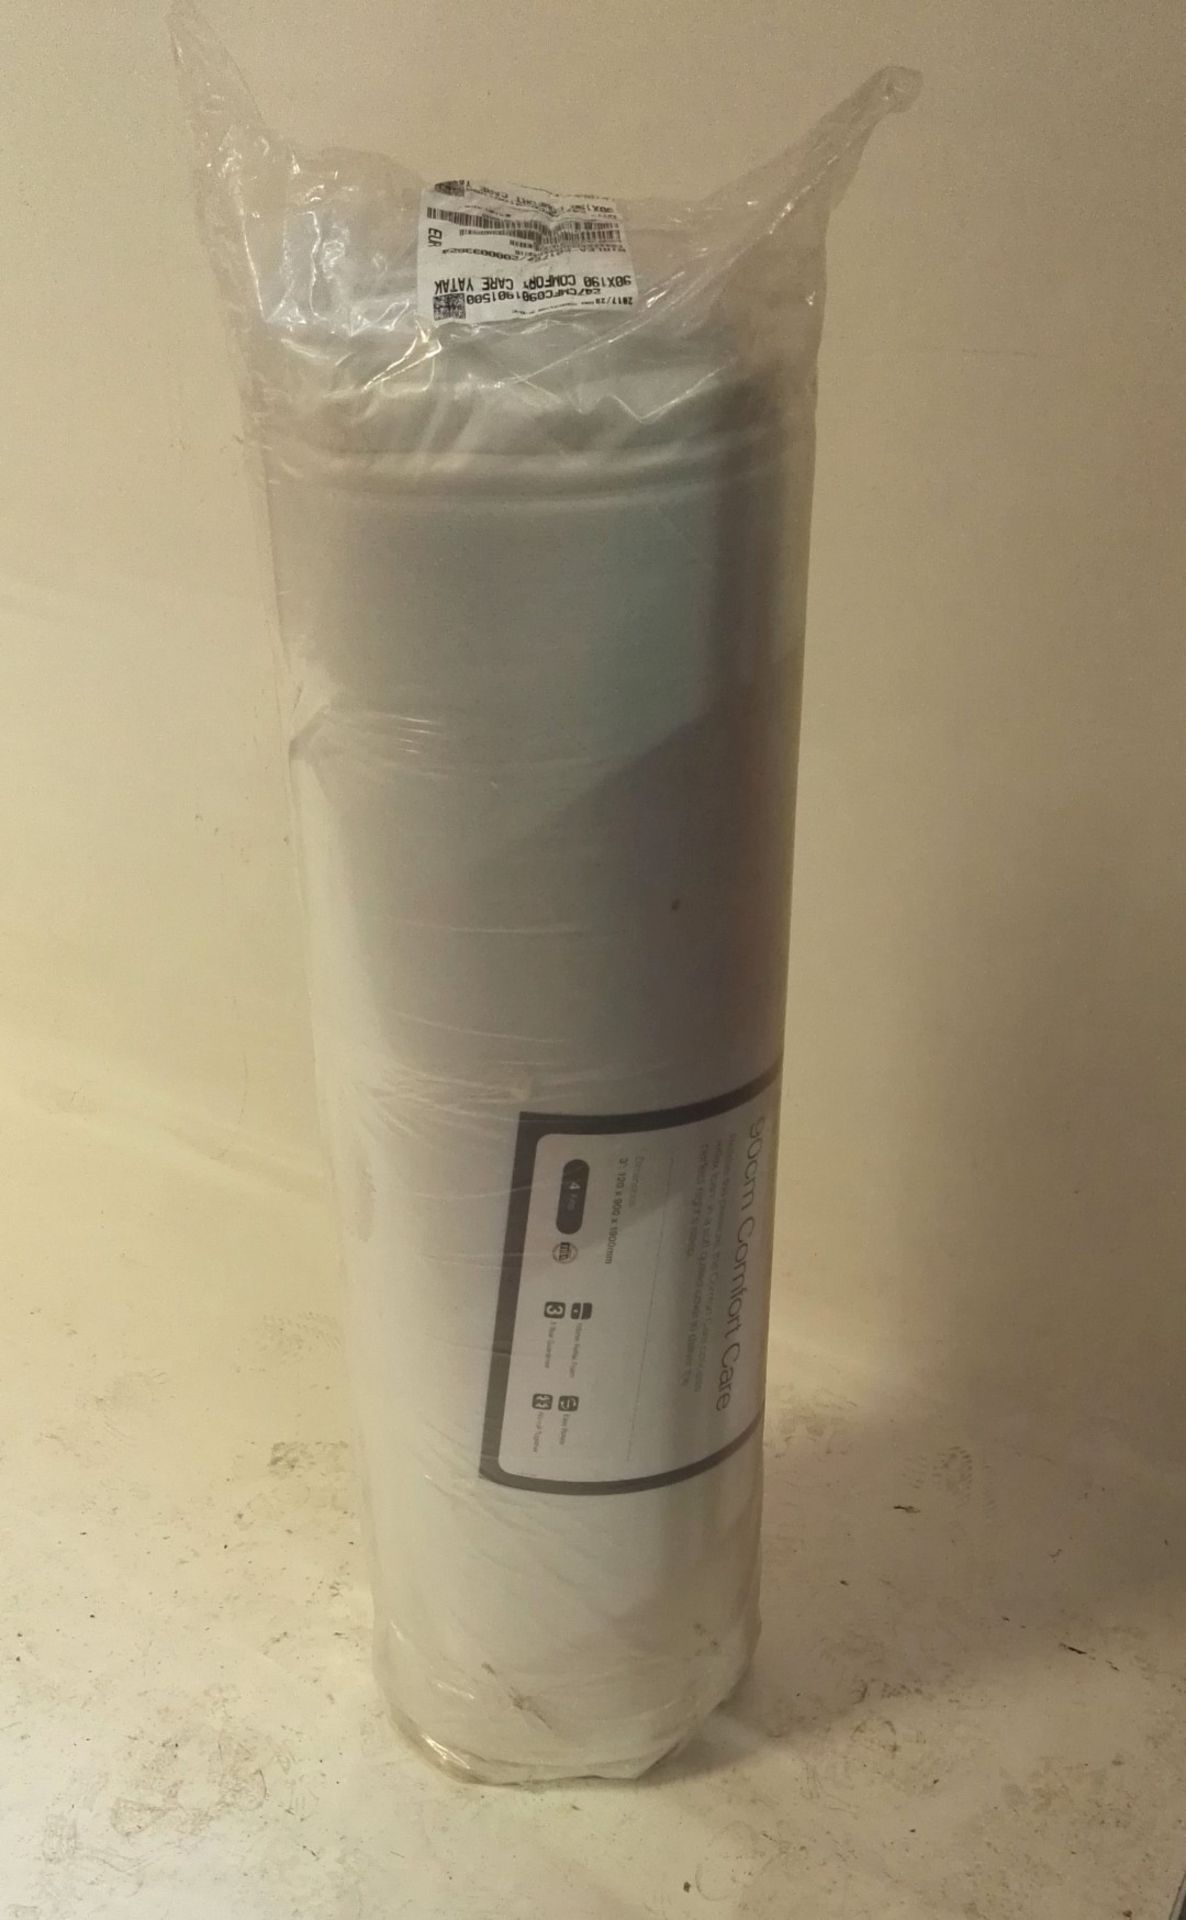 1 x Birlea 90cm Comfort Care Firm Rolled Up Reflex Foam Mattress - Brand New Stock - CL286 - - Image 6 of 6